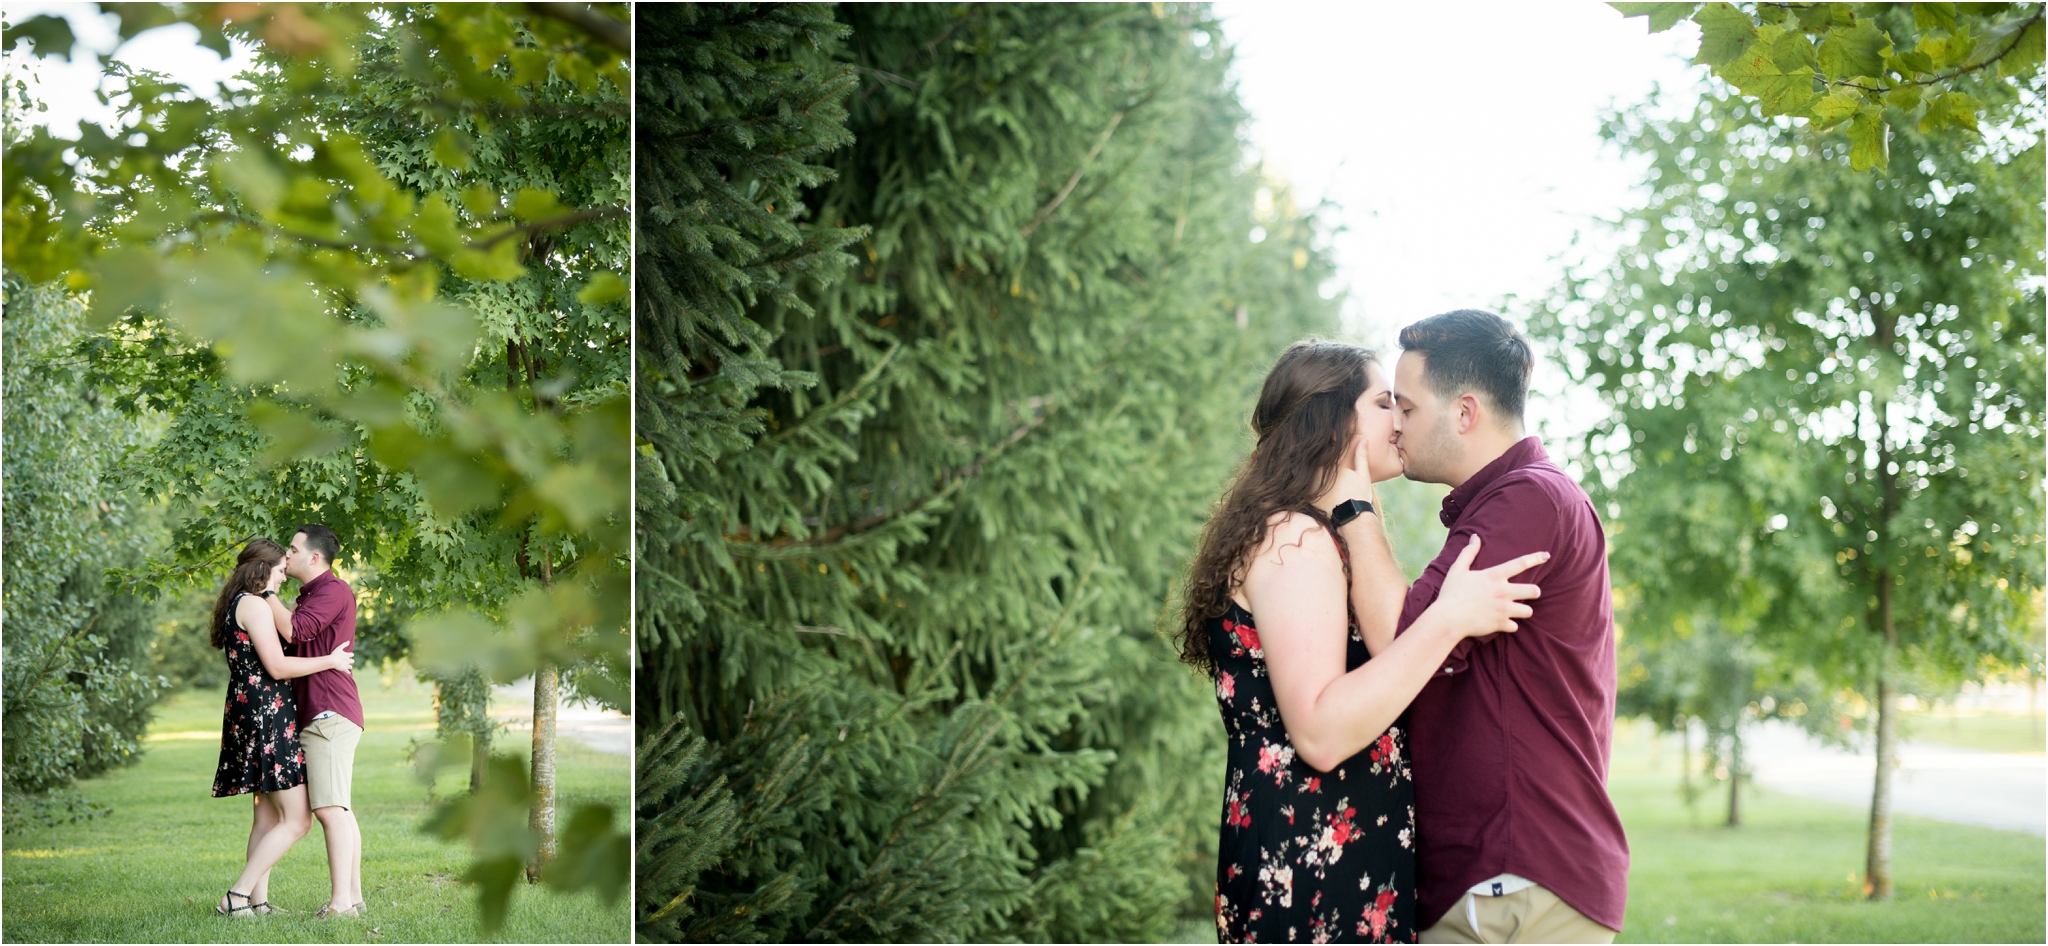 Fort Wayne Engagement Session | Sarah and Rachel Wedding Photographers | Salomon Farms